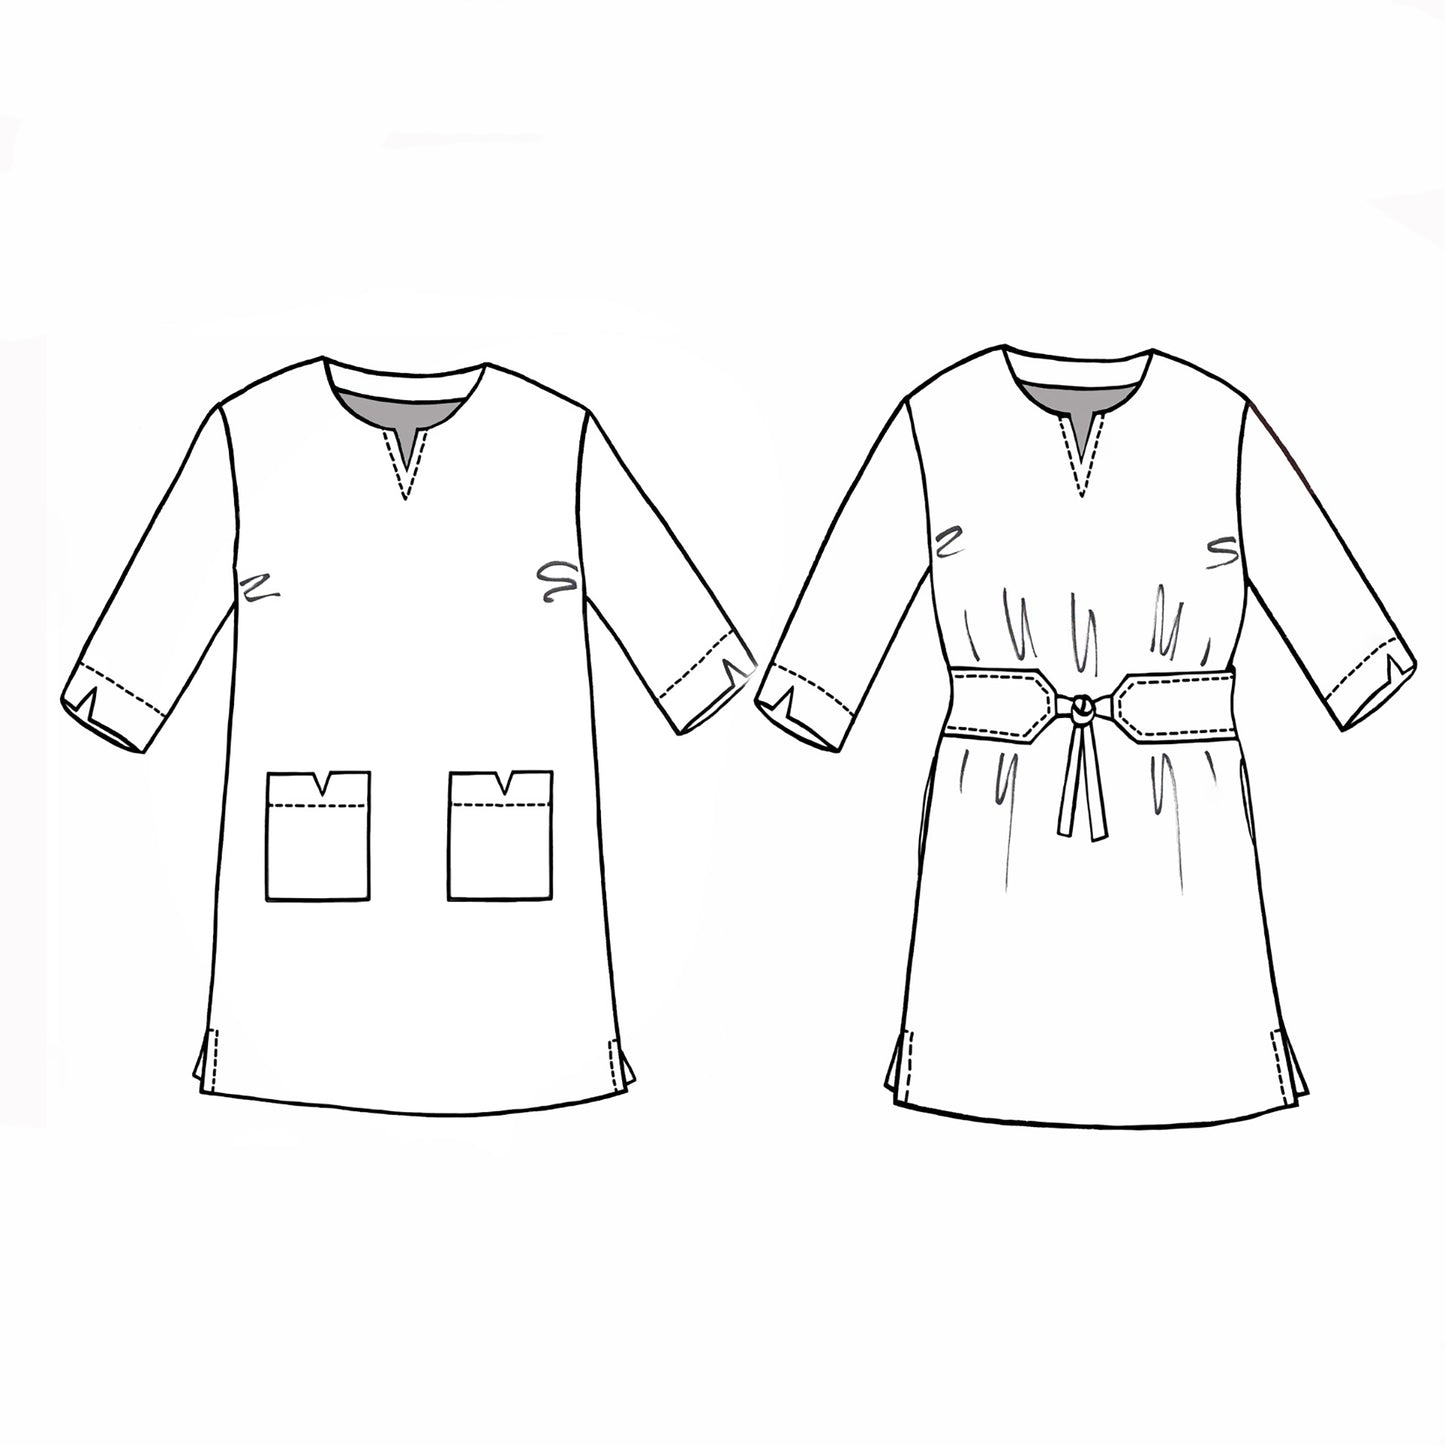 VALERIE DRESS with OBI belt sewing pattern